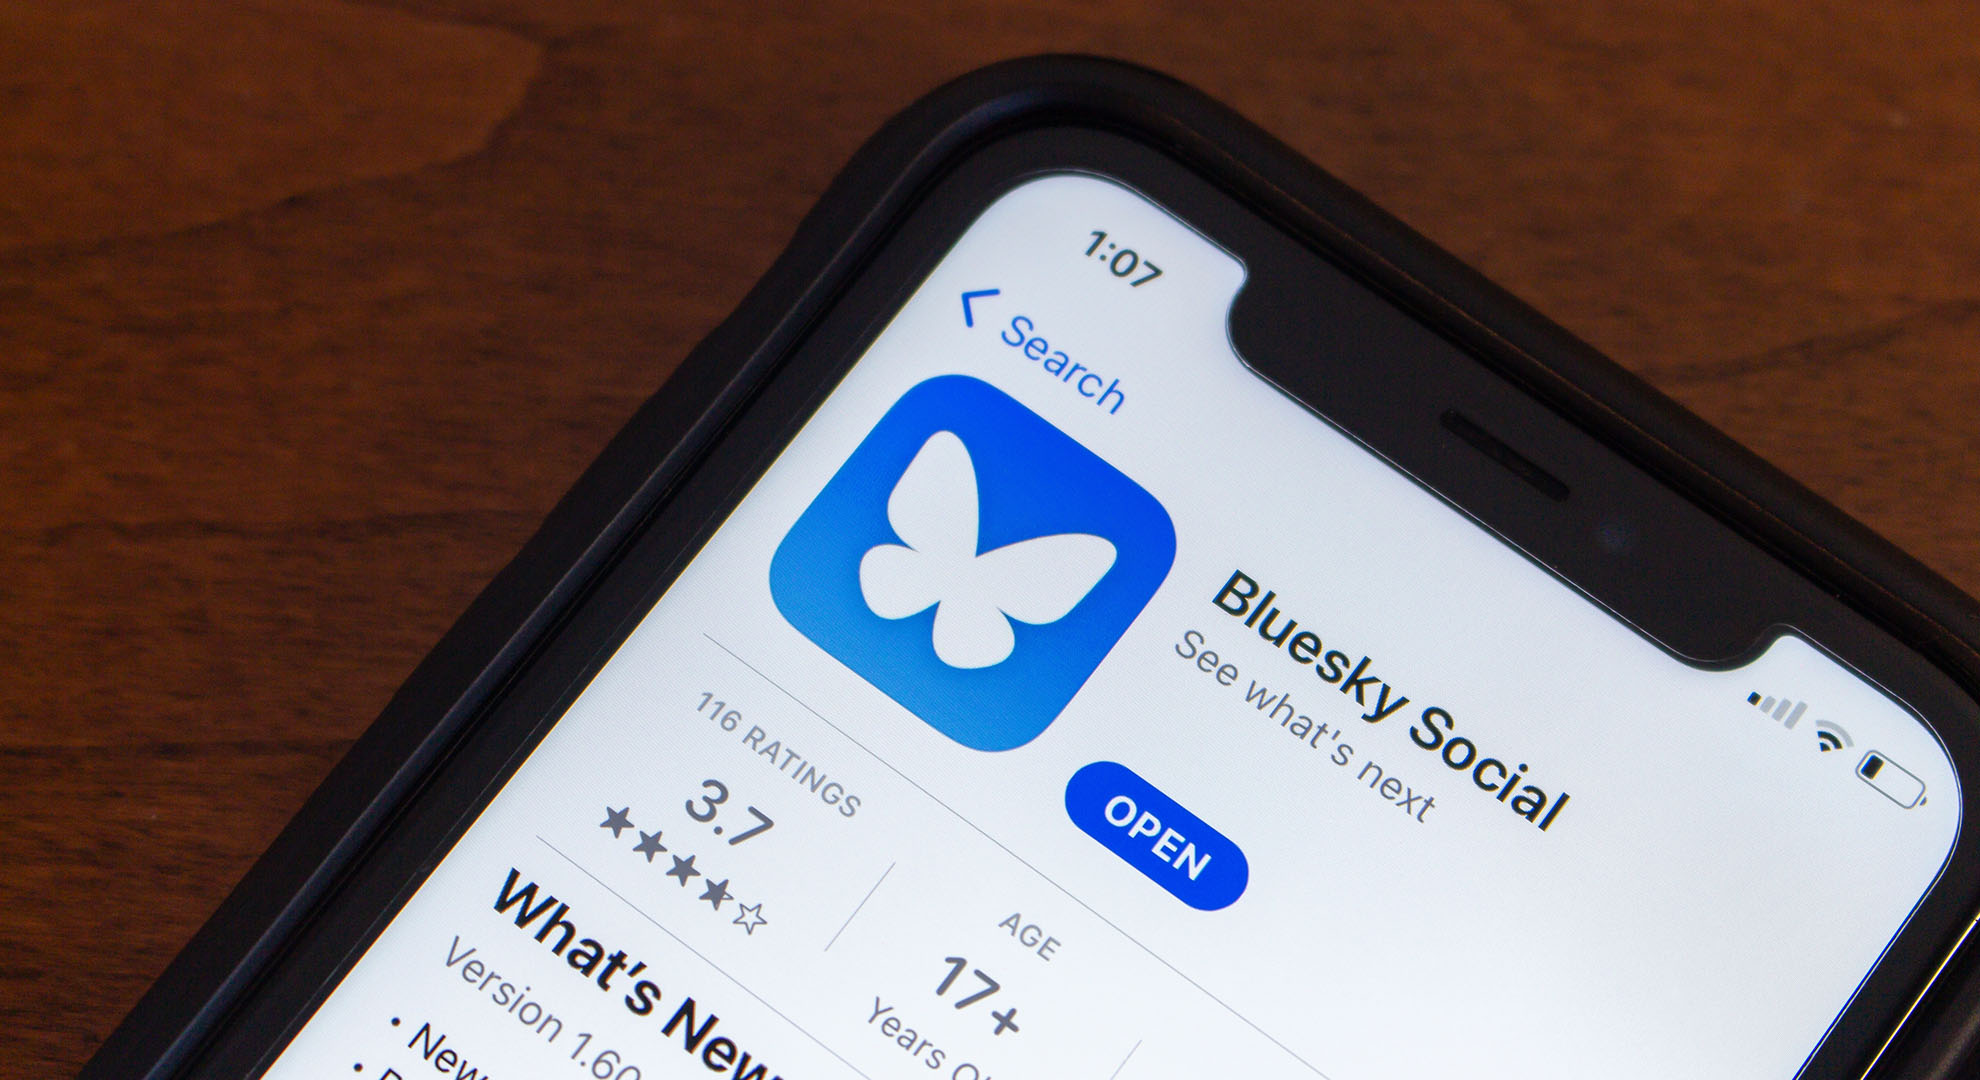 Blueskyのロゴ
Twitter alternative Bluesky SocialがiPhoneの画面のApp Storeで確認されました。分散型ソーシャルメディアプロトコル （認証転送プロトコル）